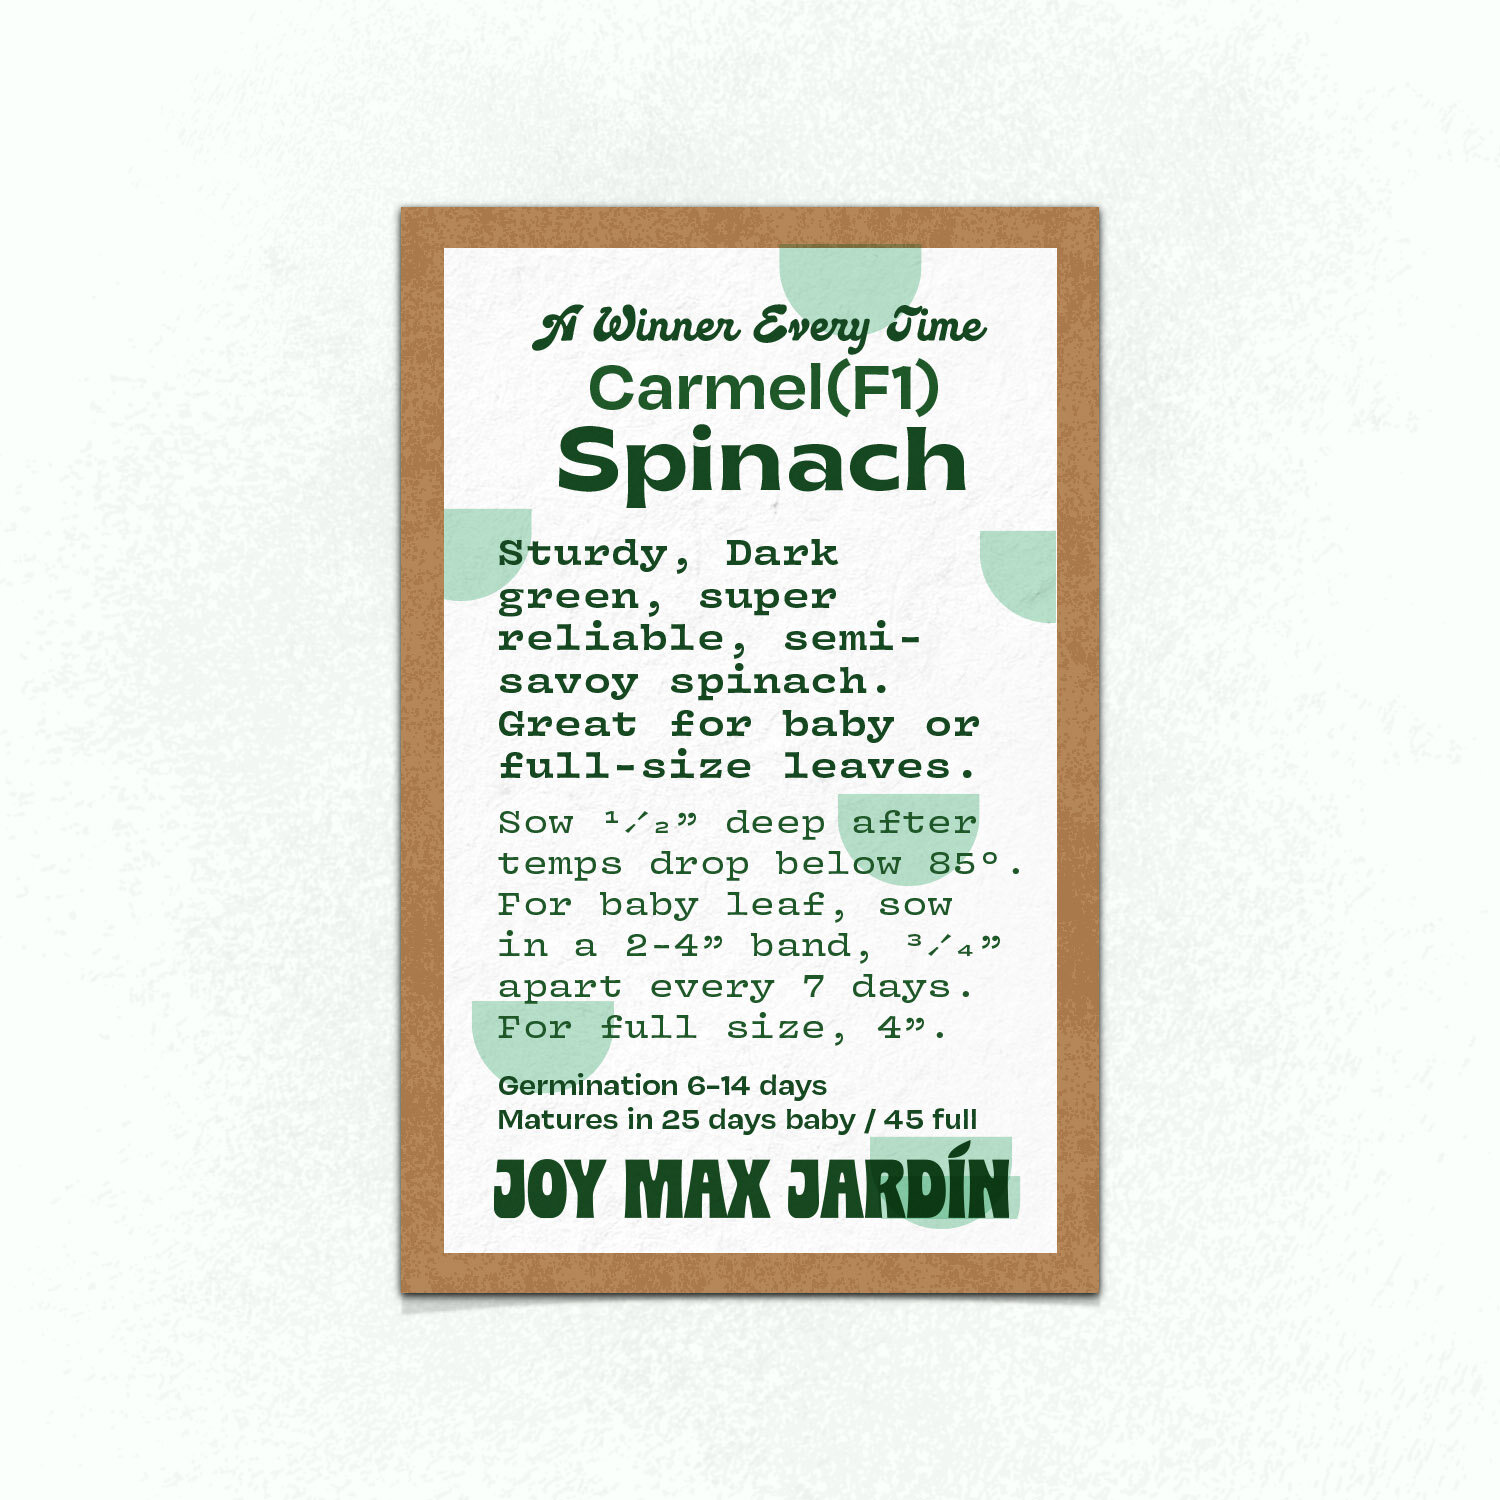 Joy Max Jardin Carmel Spinach Seed.jpg